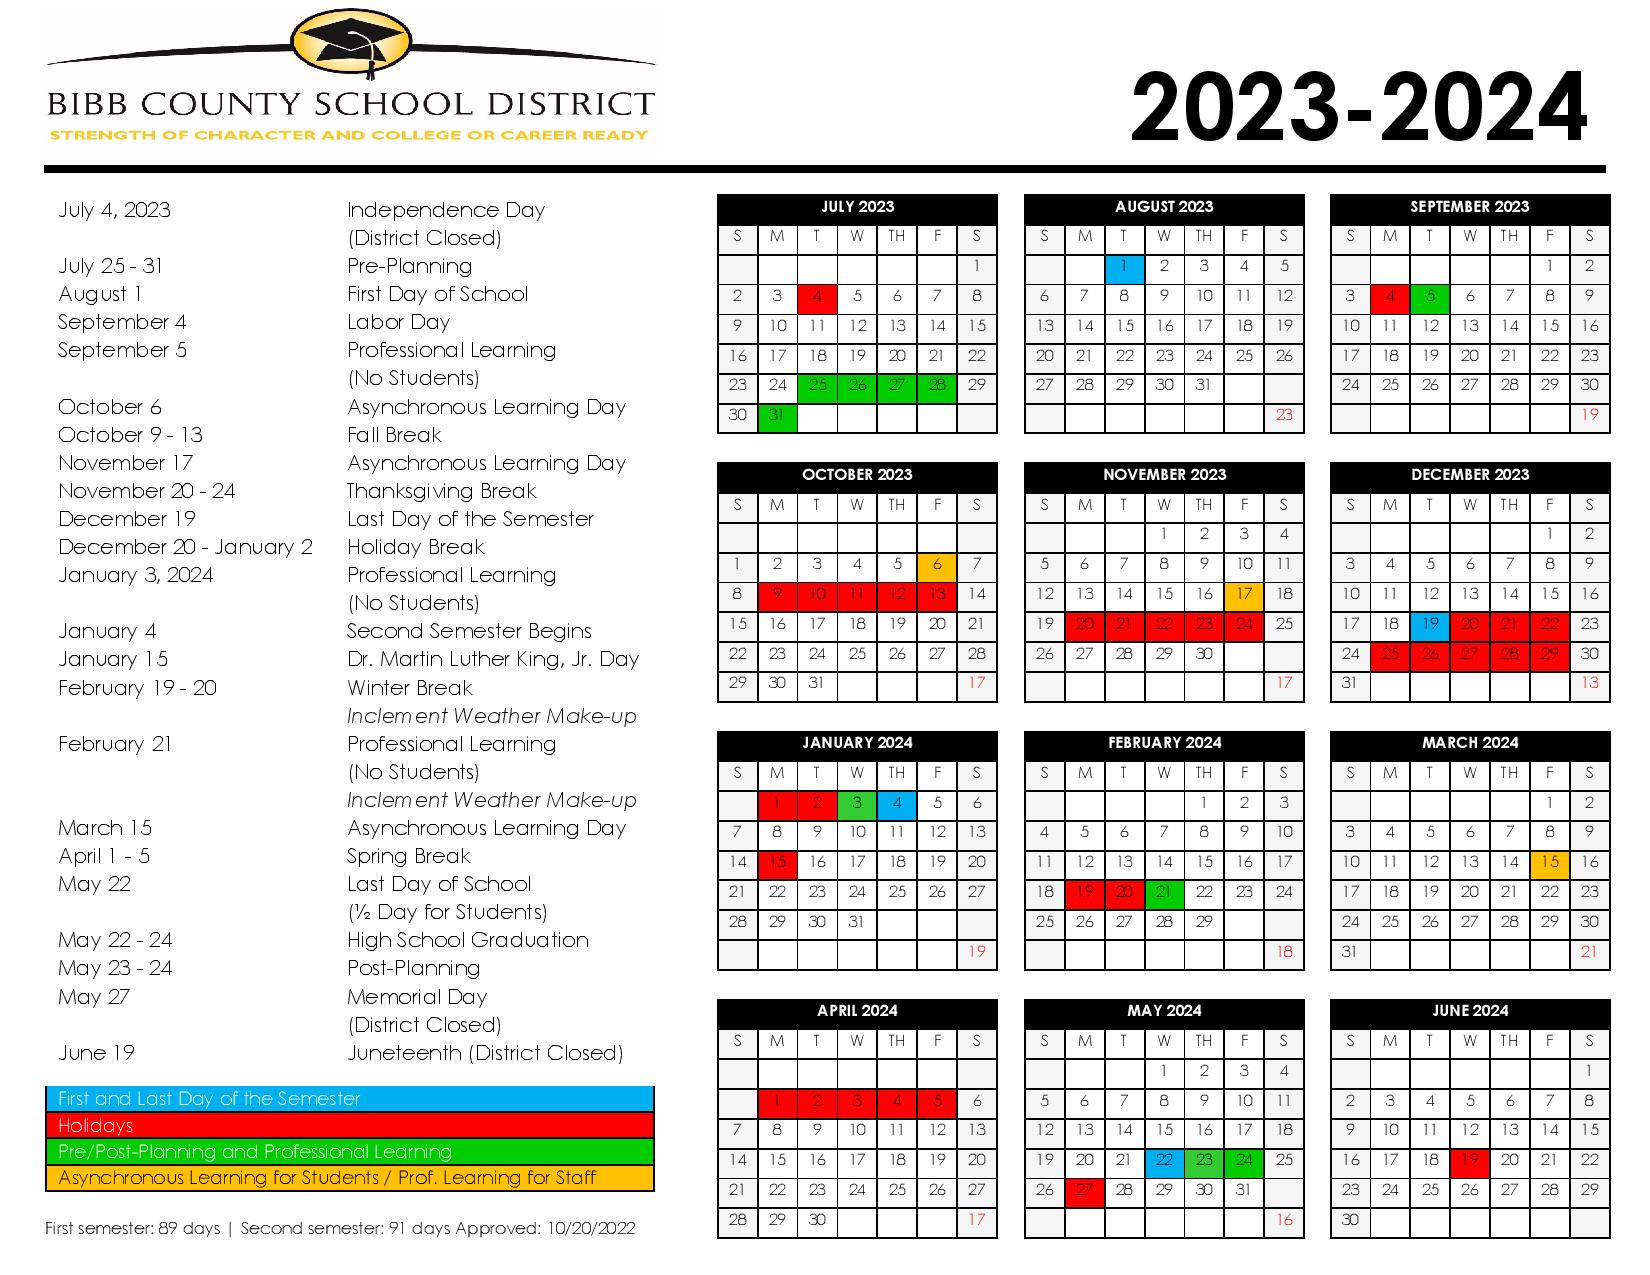 Bibb County School District Calendar 20232024 in PDF